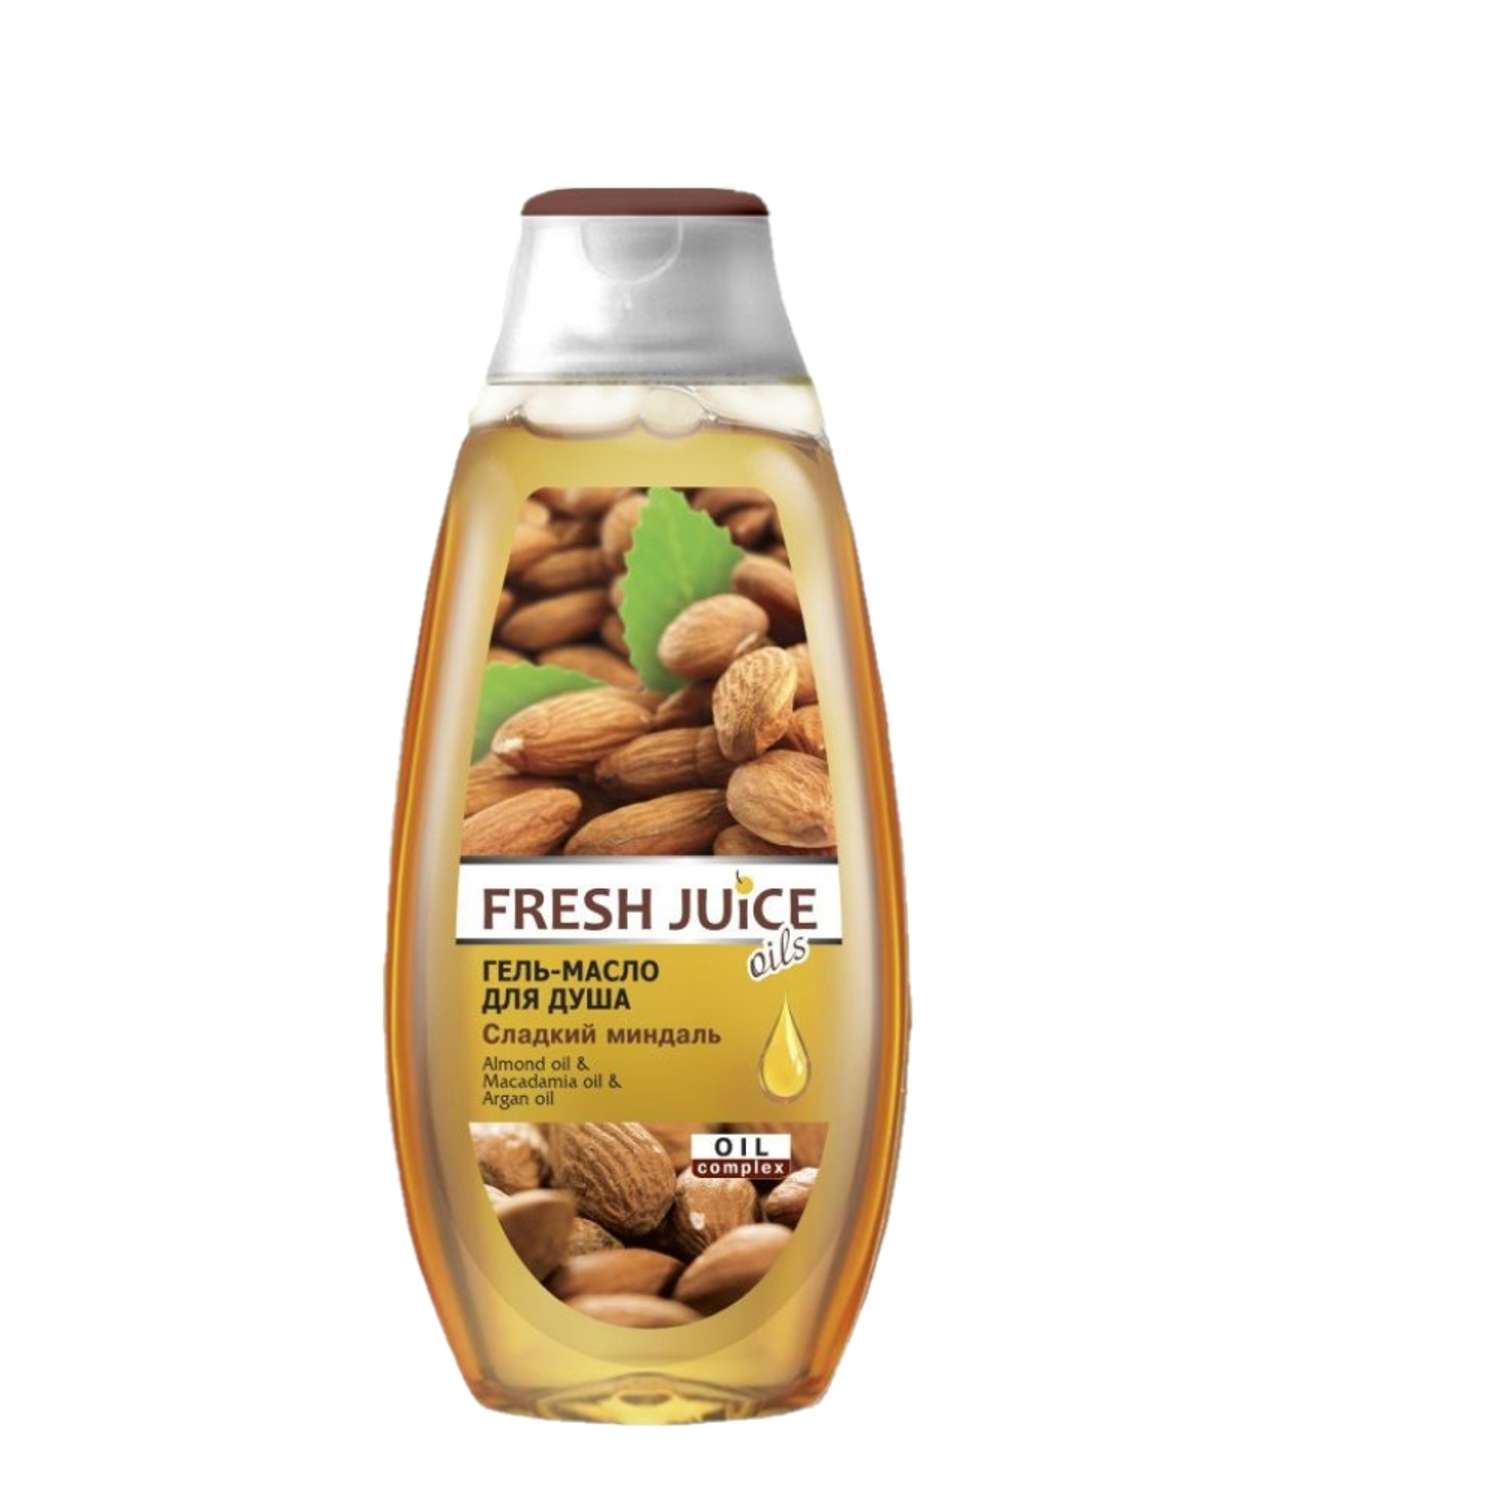 Fresh Juice гель-масло для душа Sweet Almond 400мл. Fresh Juice крем-гель для душа Sweet Almond 400 мл. Фреш Джус гель для душа 400мл. "Fresh Juice"гель для душа "Lemongrass & Vanilla", 750 мл.